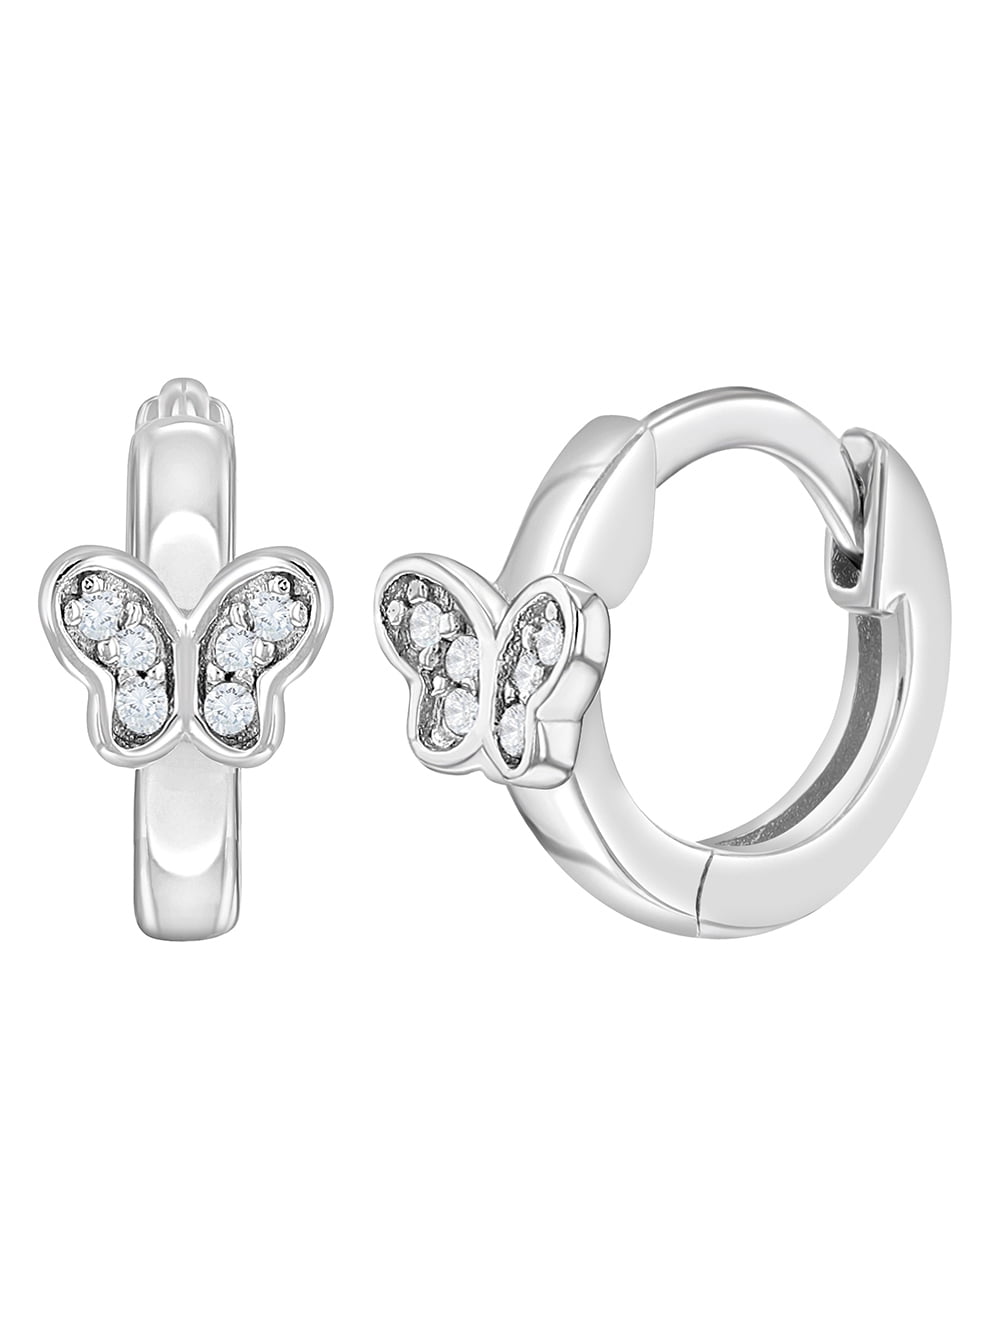 925 Sterling Silver Dazzling Clear CZ Hoop Earrings Fine Jewelry Gift For Her